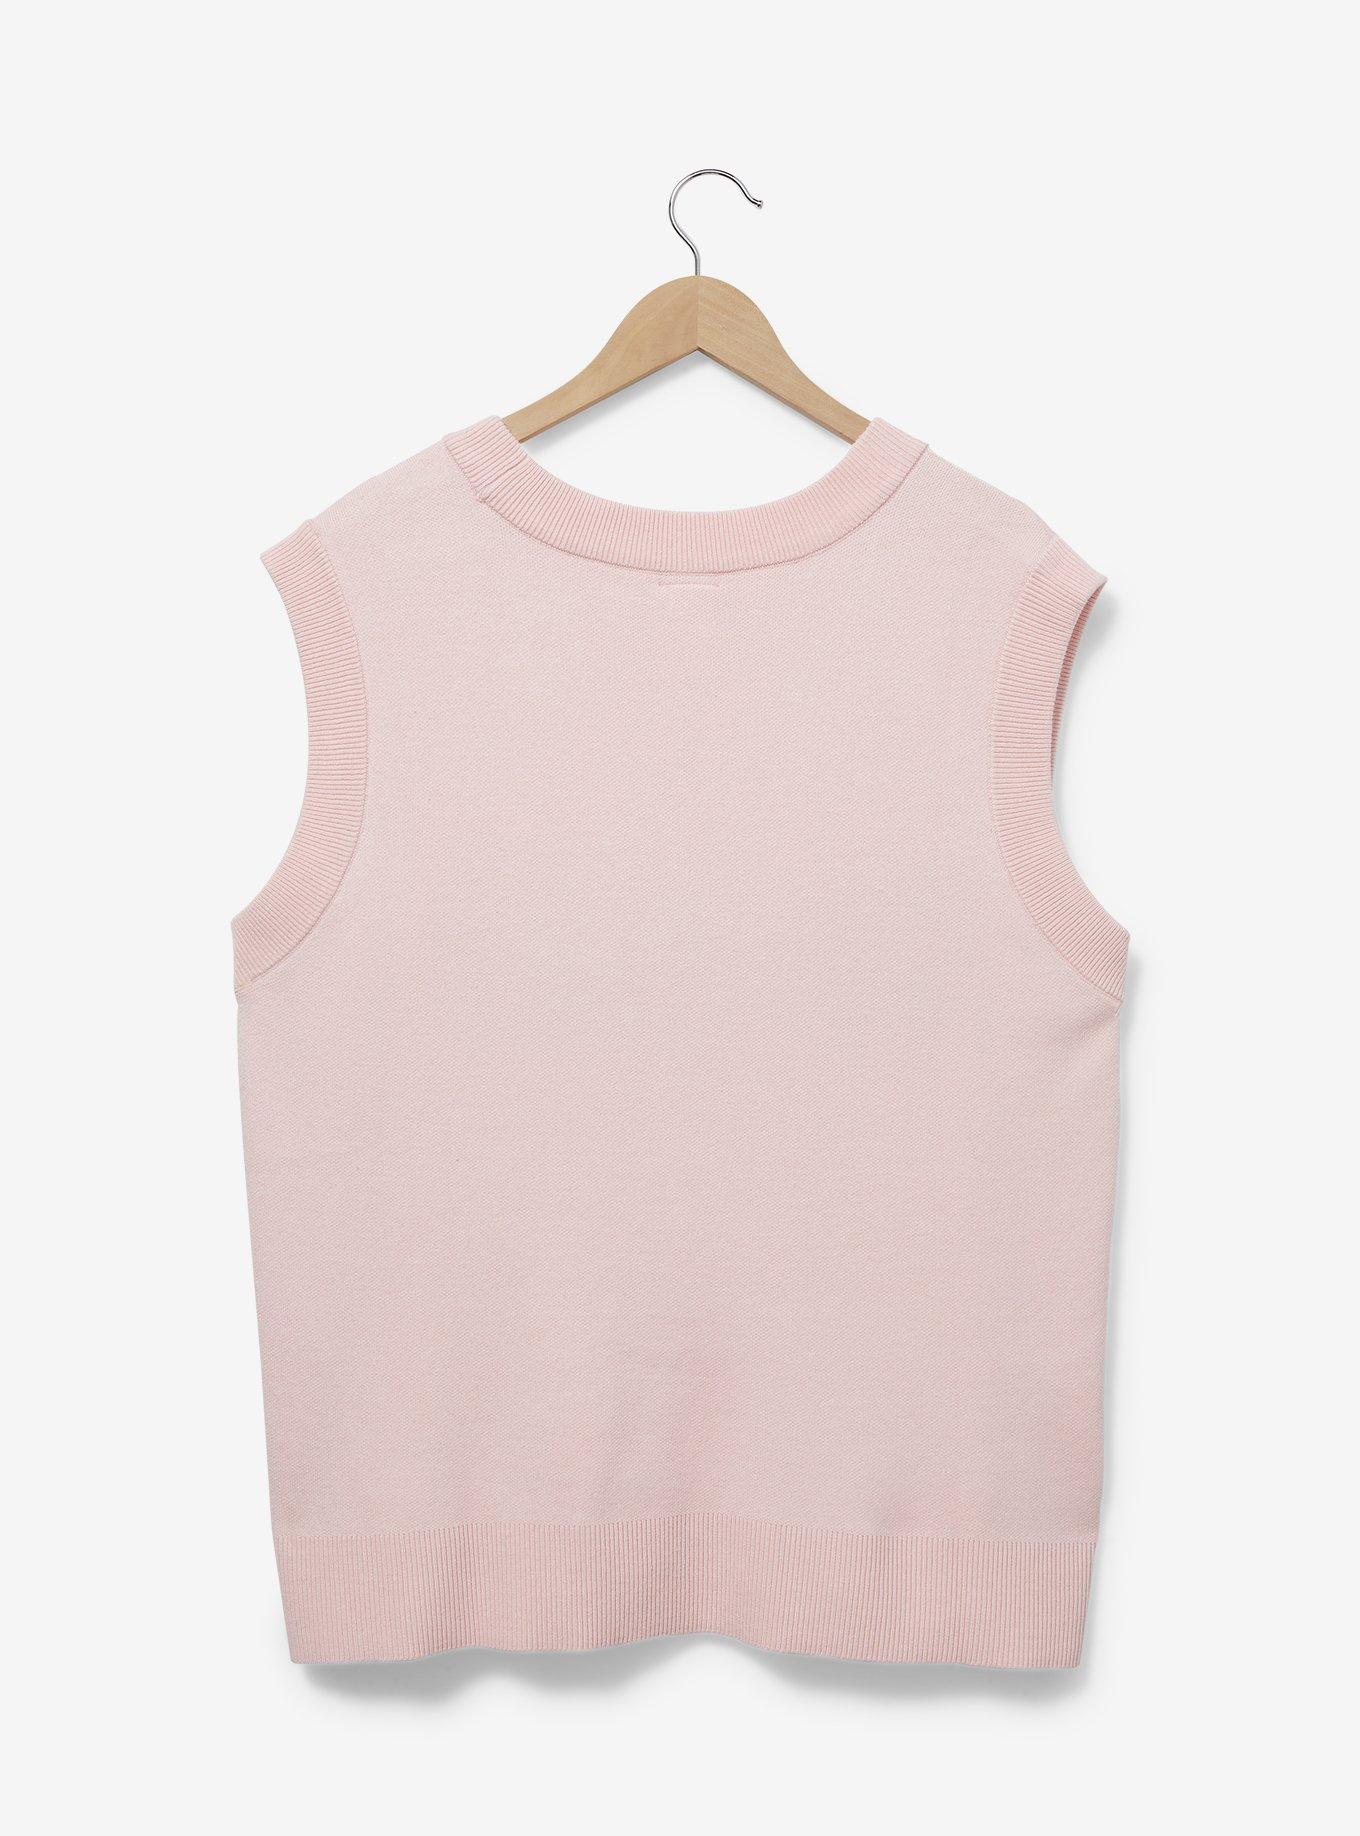 Sanrio My Melody Kawaii Mart Women's Plus Size Vest — BoxLunch Exclusive, , alternate